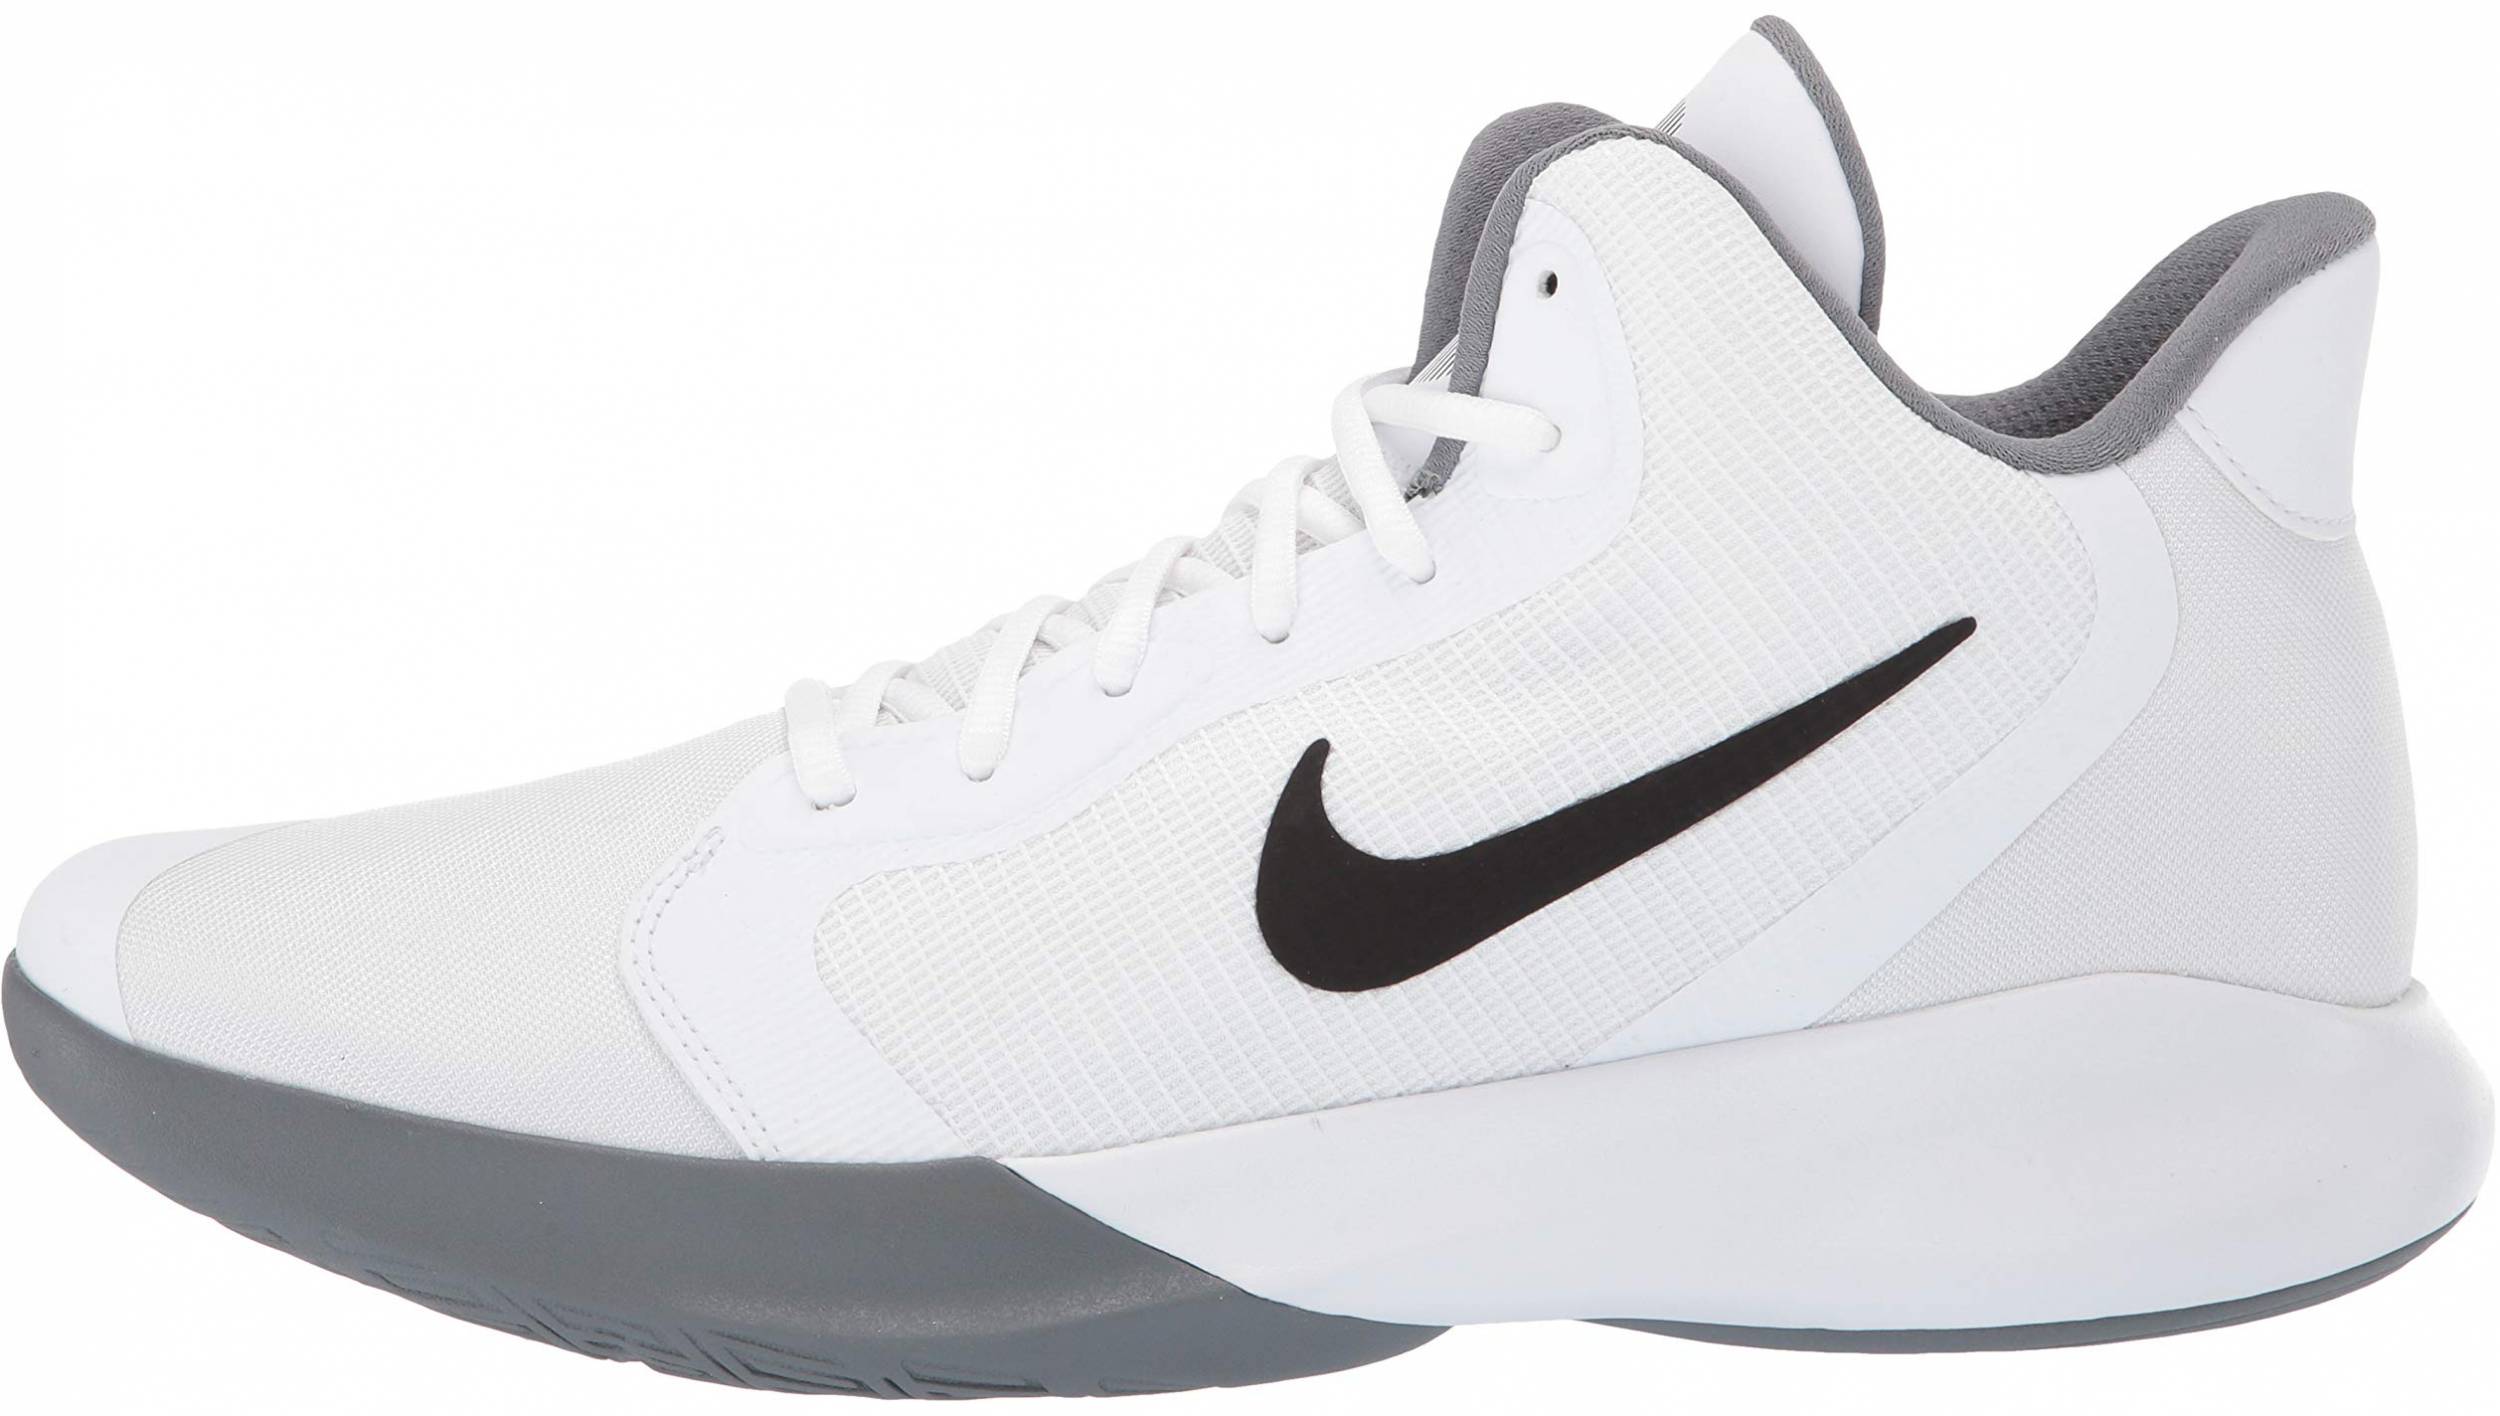 Save 21% on White Nike Basketball Shoes 